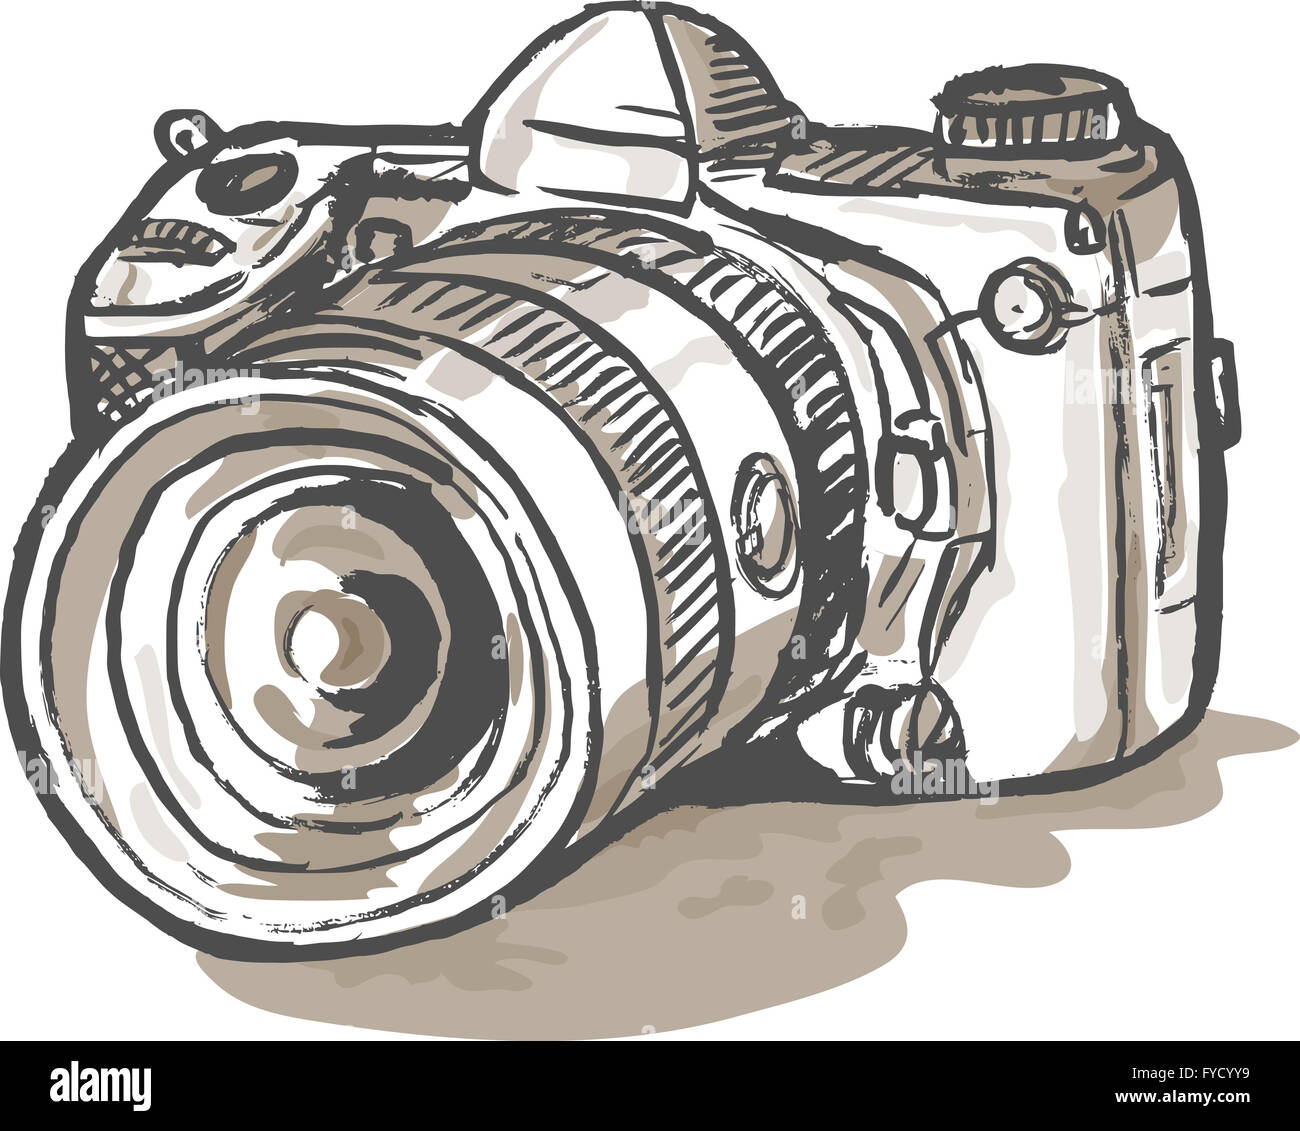 Disegno di una fotocamera reflex digitale Foto stock - Alamy